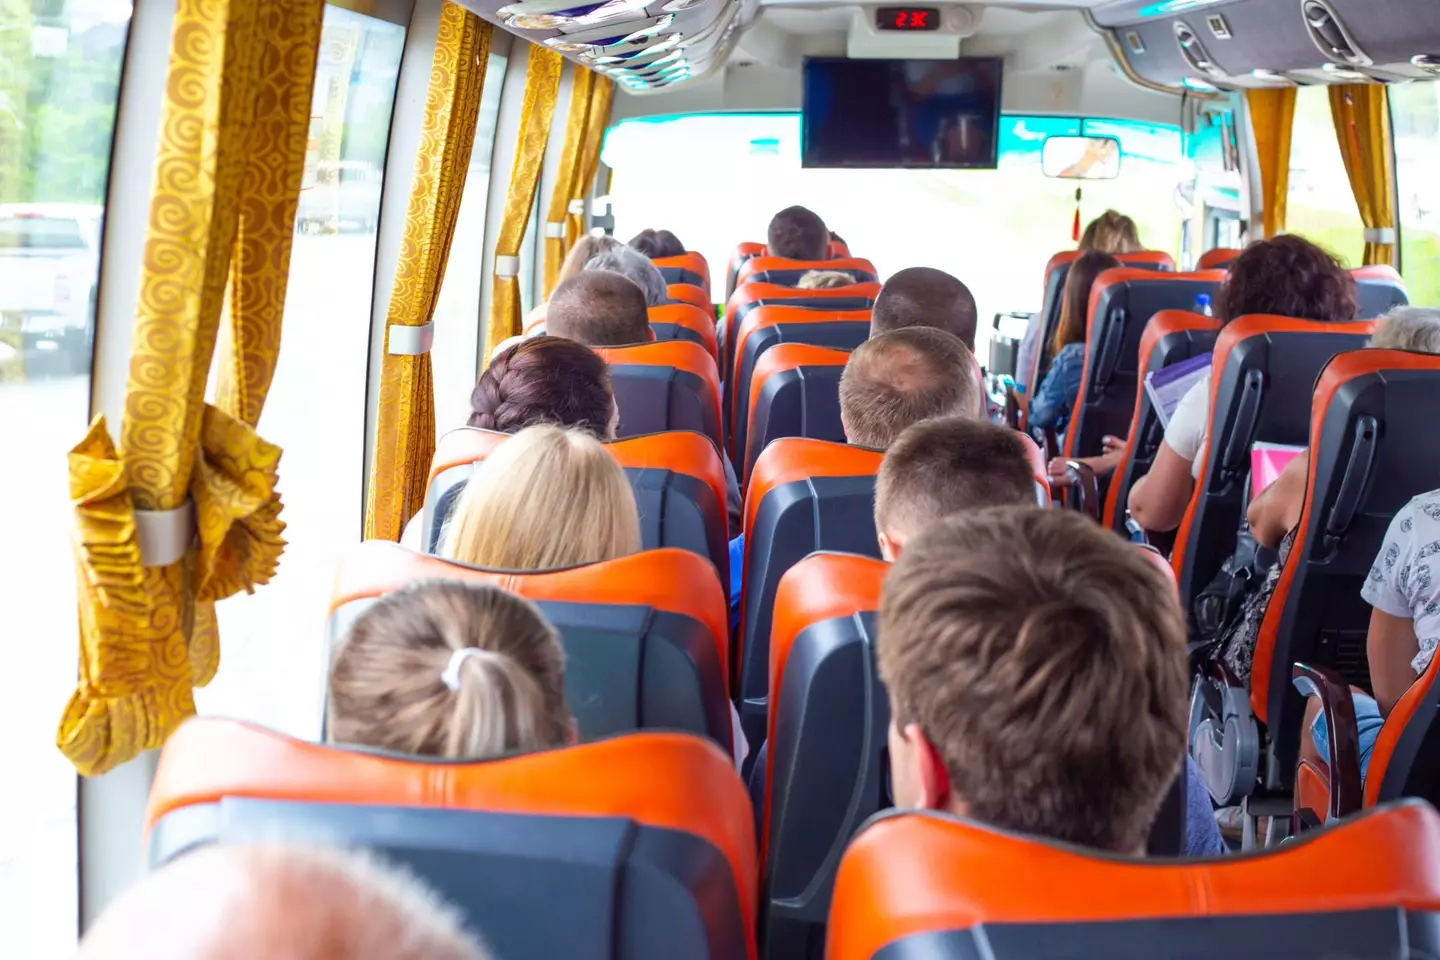 Wetherspoon has organised an 11-hour 'booze bus' trip.